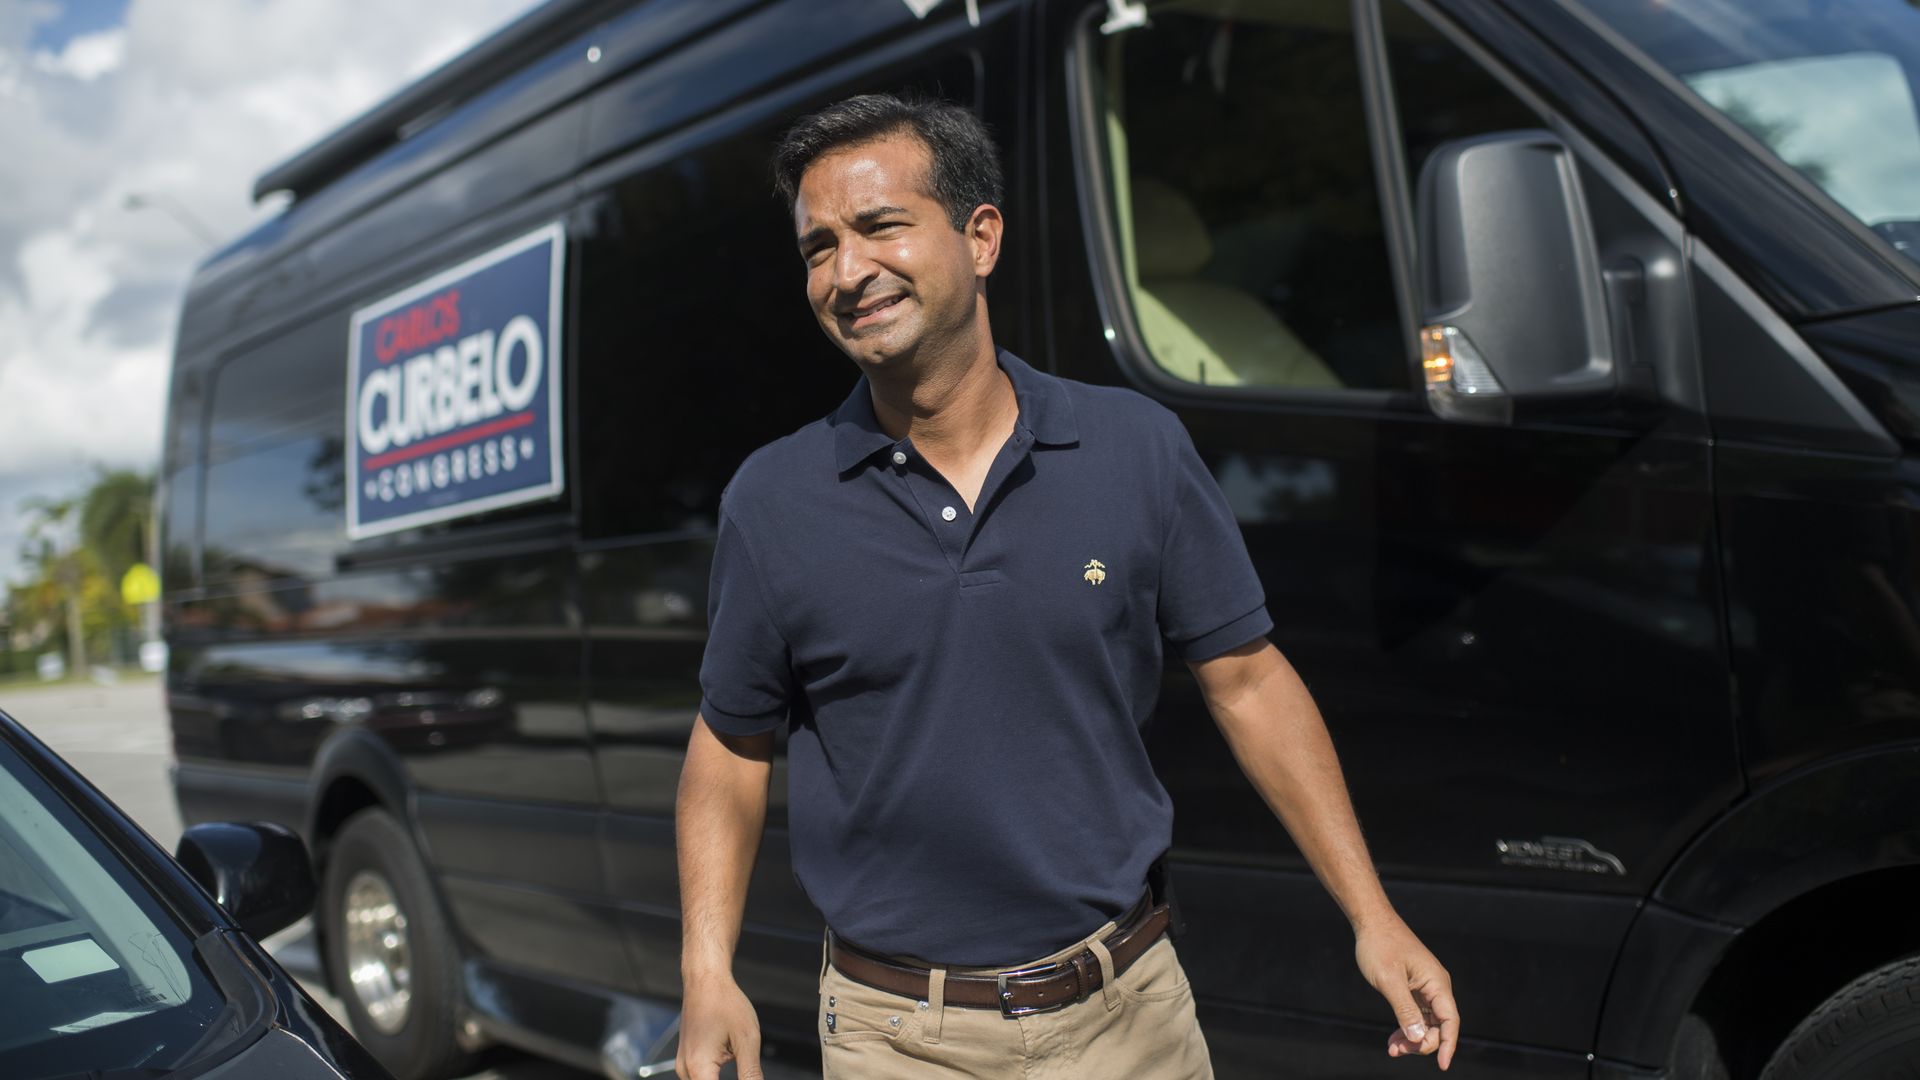 Carlos Curbelo walks outside of his campaign van